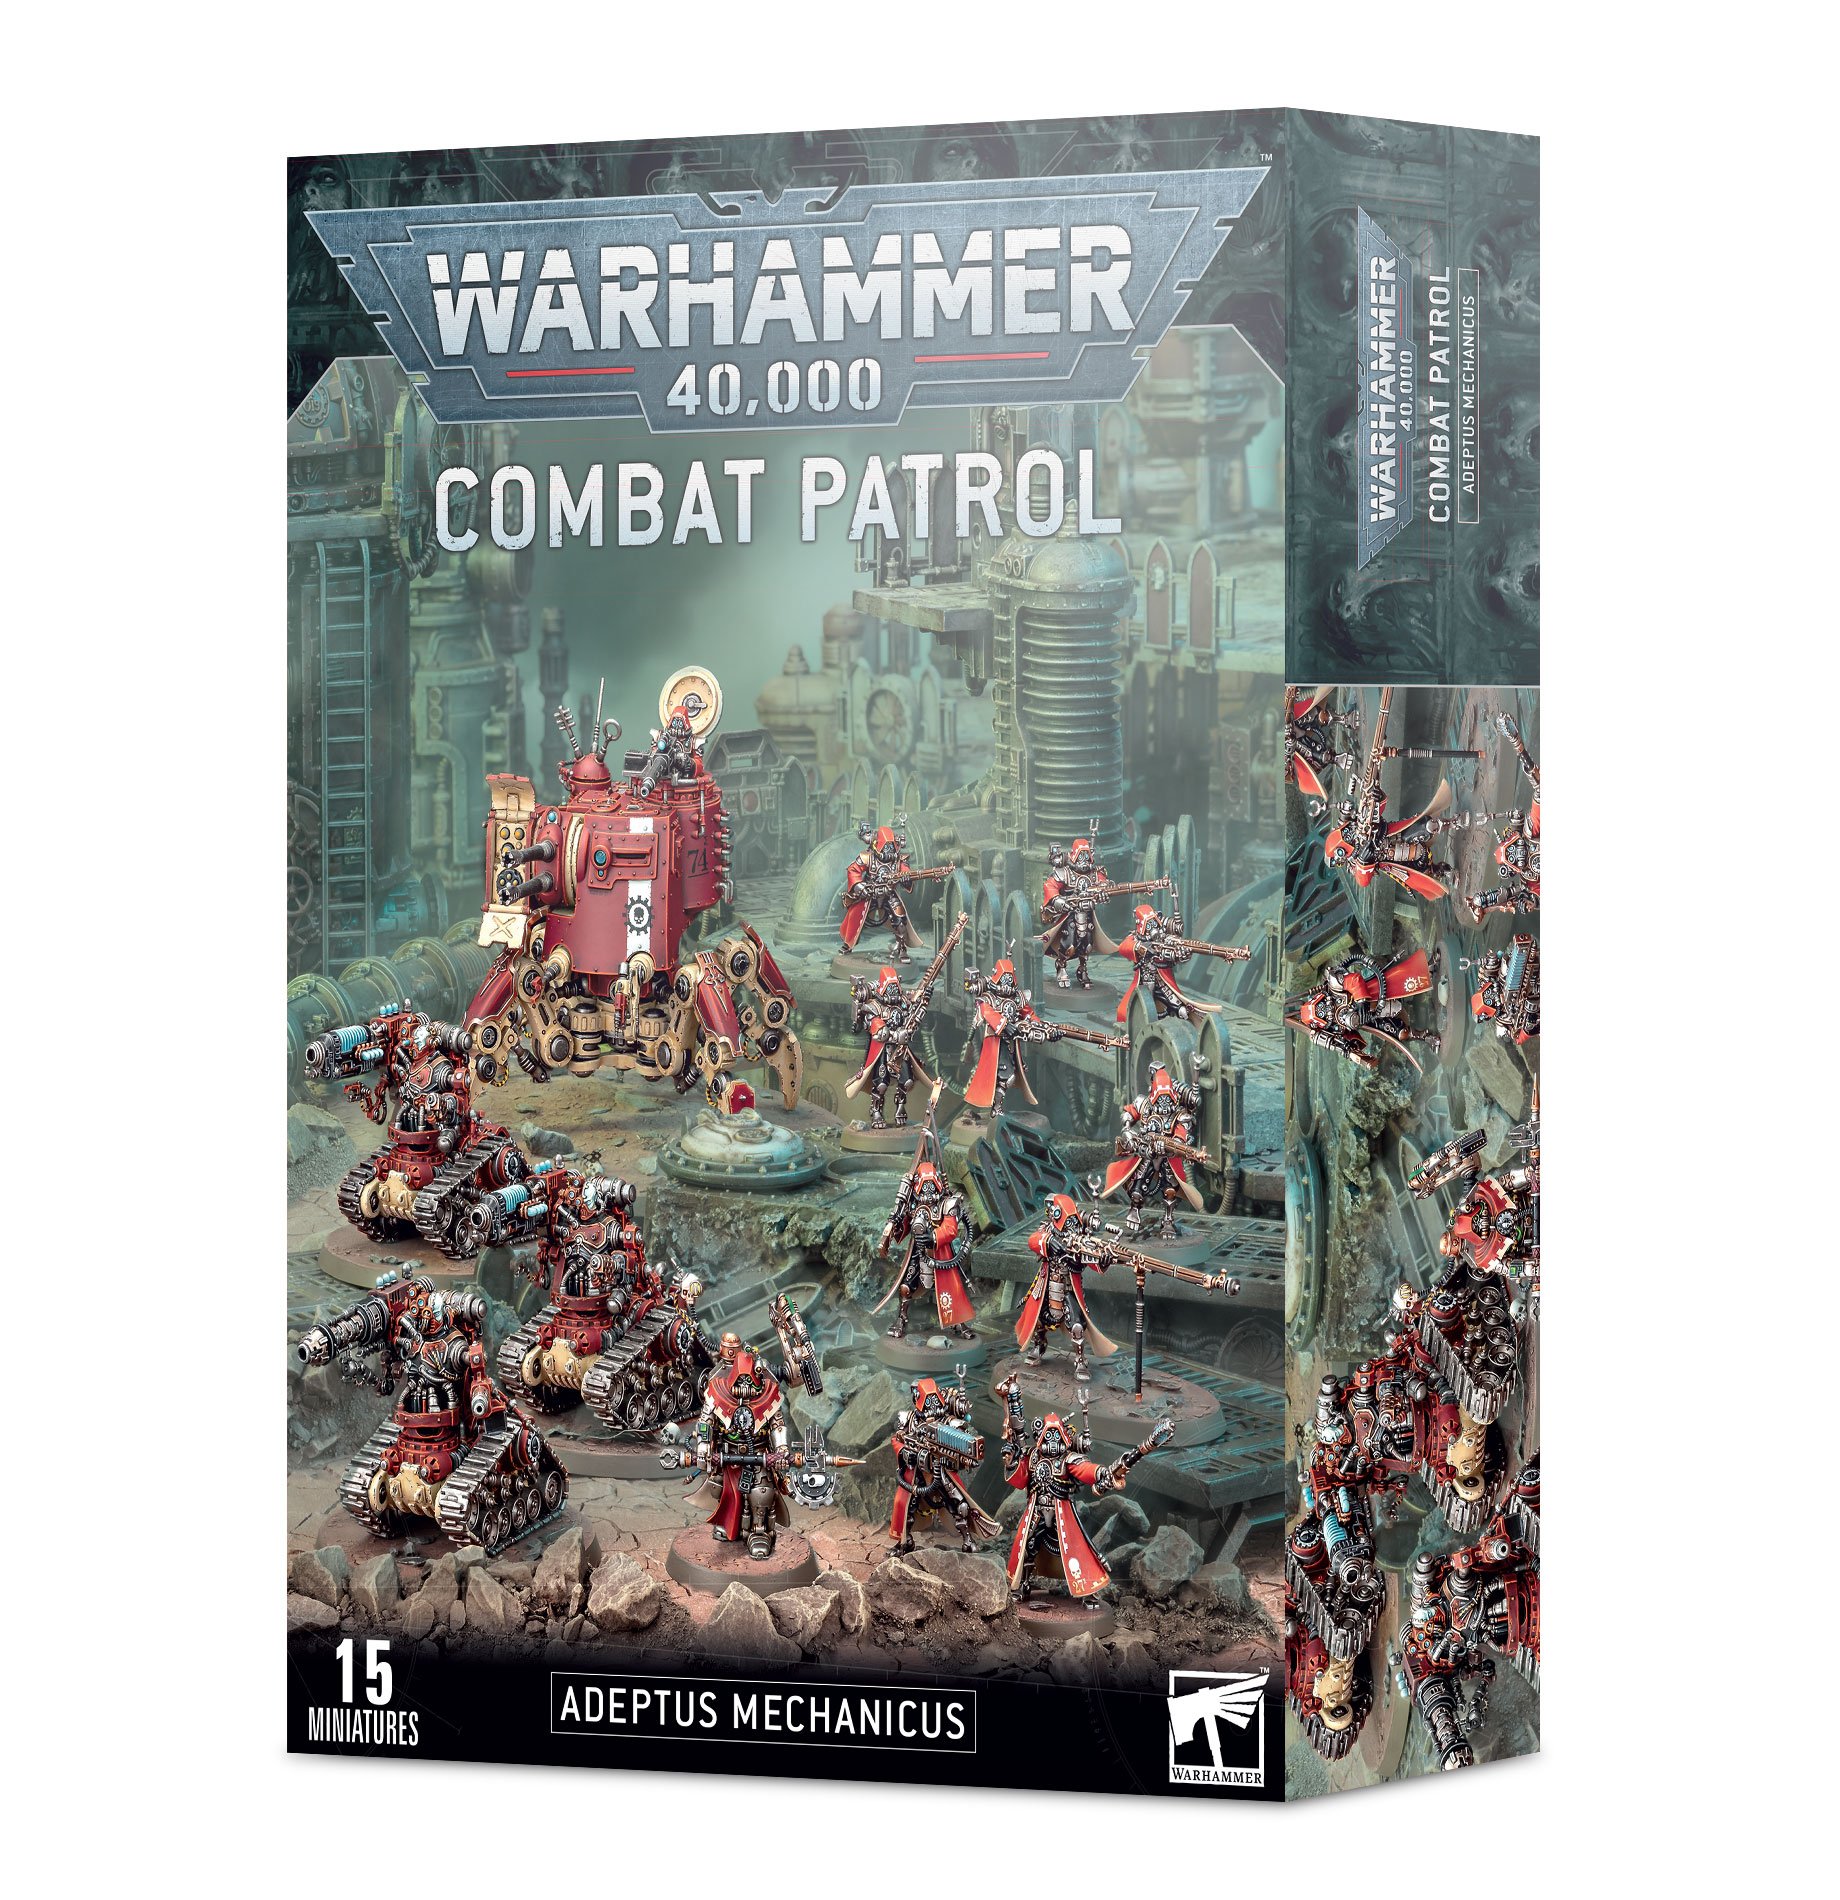 Combat Patrol Adeptus Mechanicus